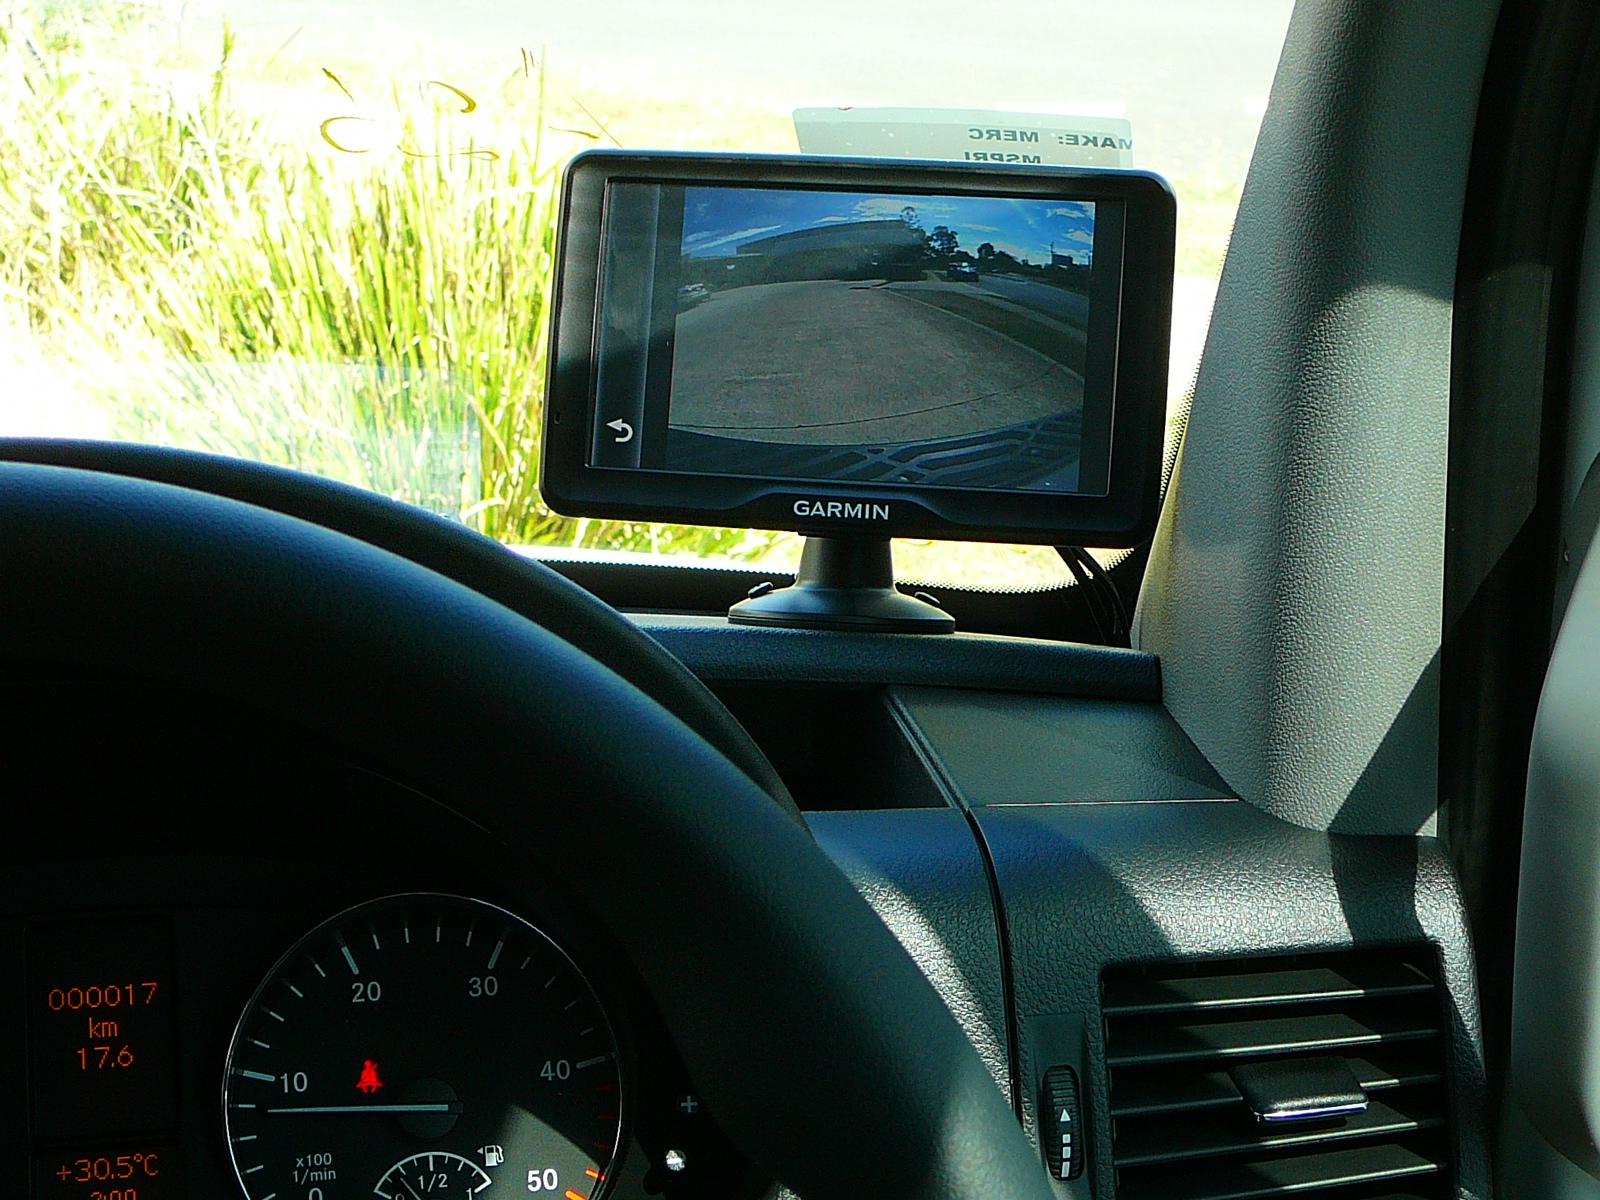 Mercedes Benz Sprinter 2013, Garmin GPS Navigation and Reverse Camera